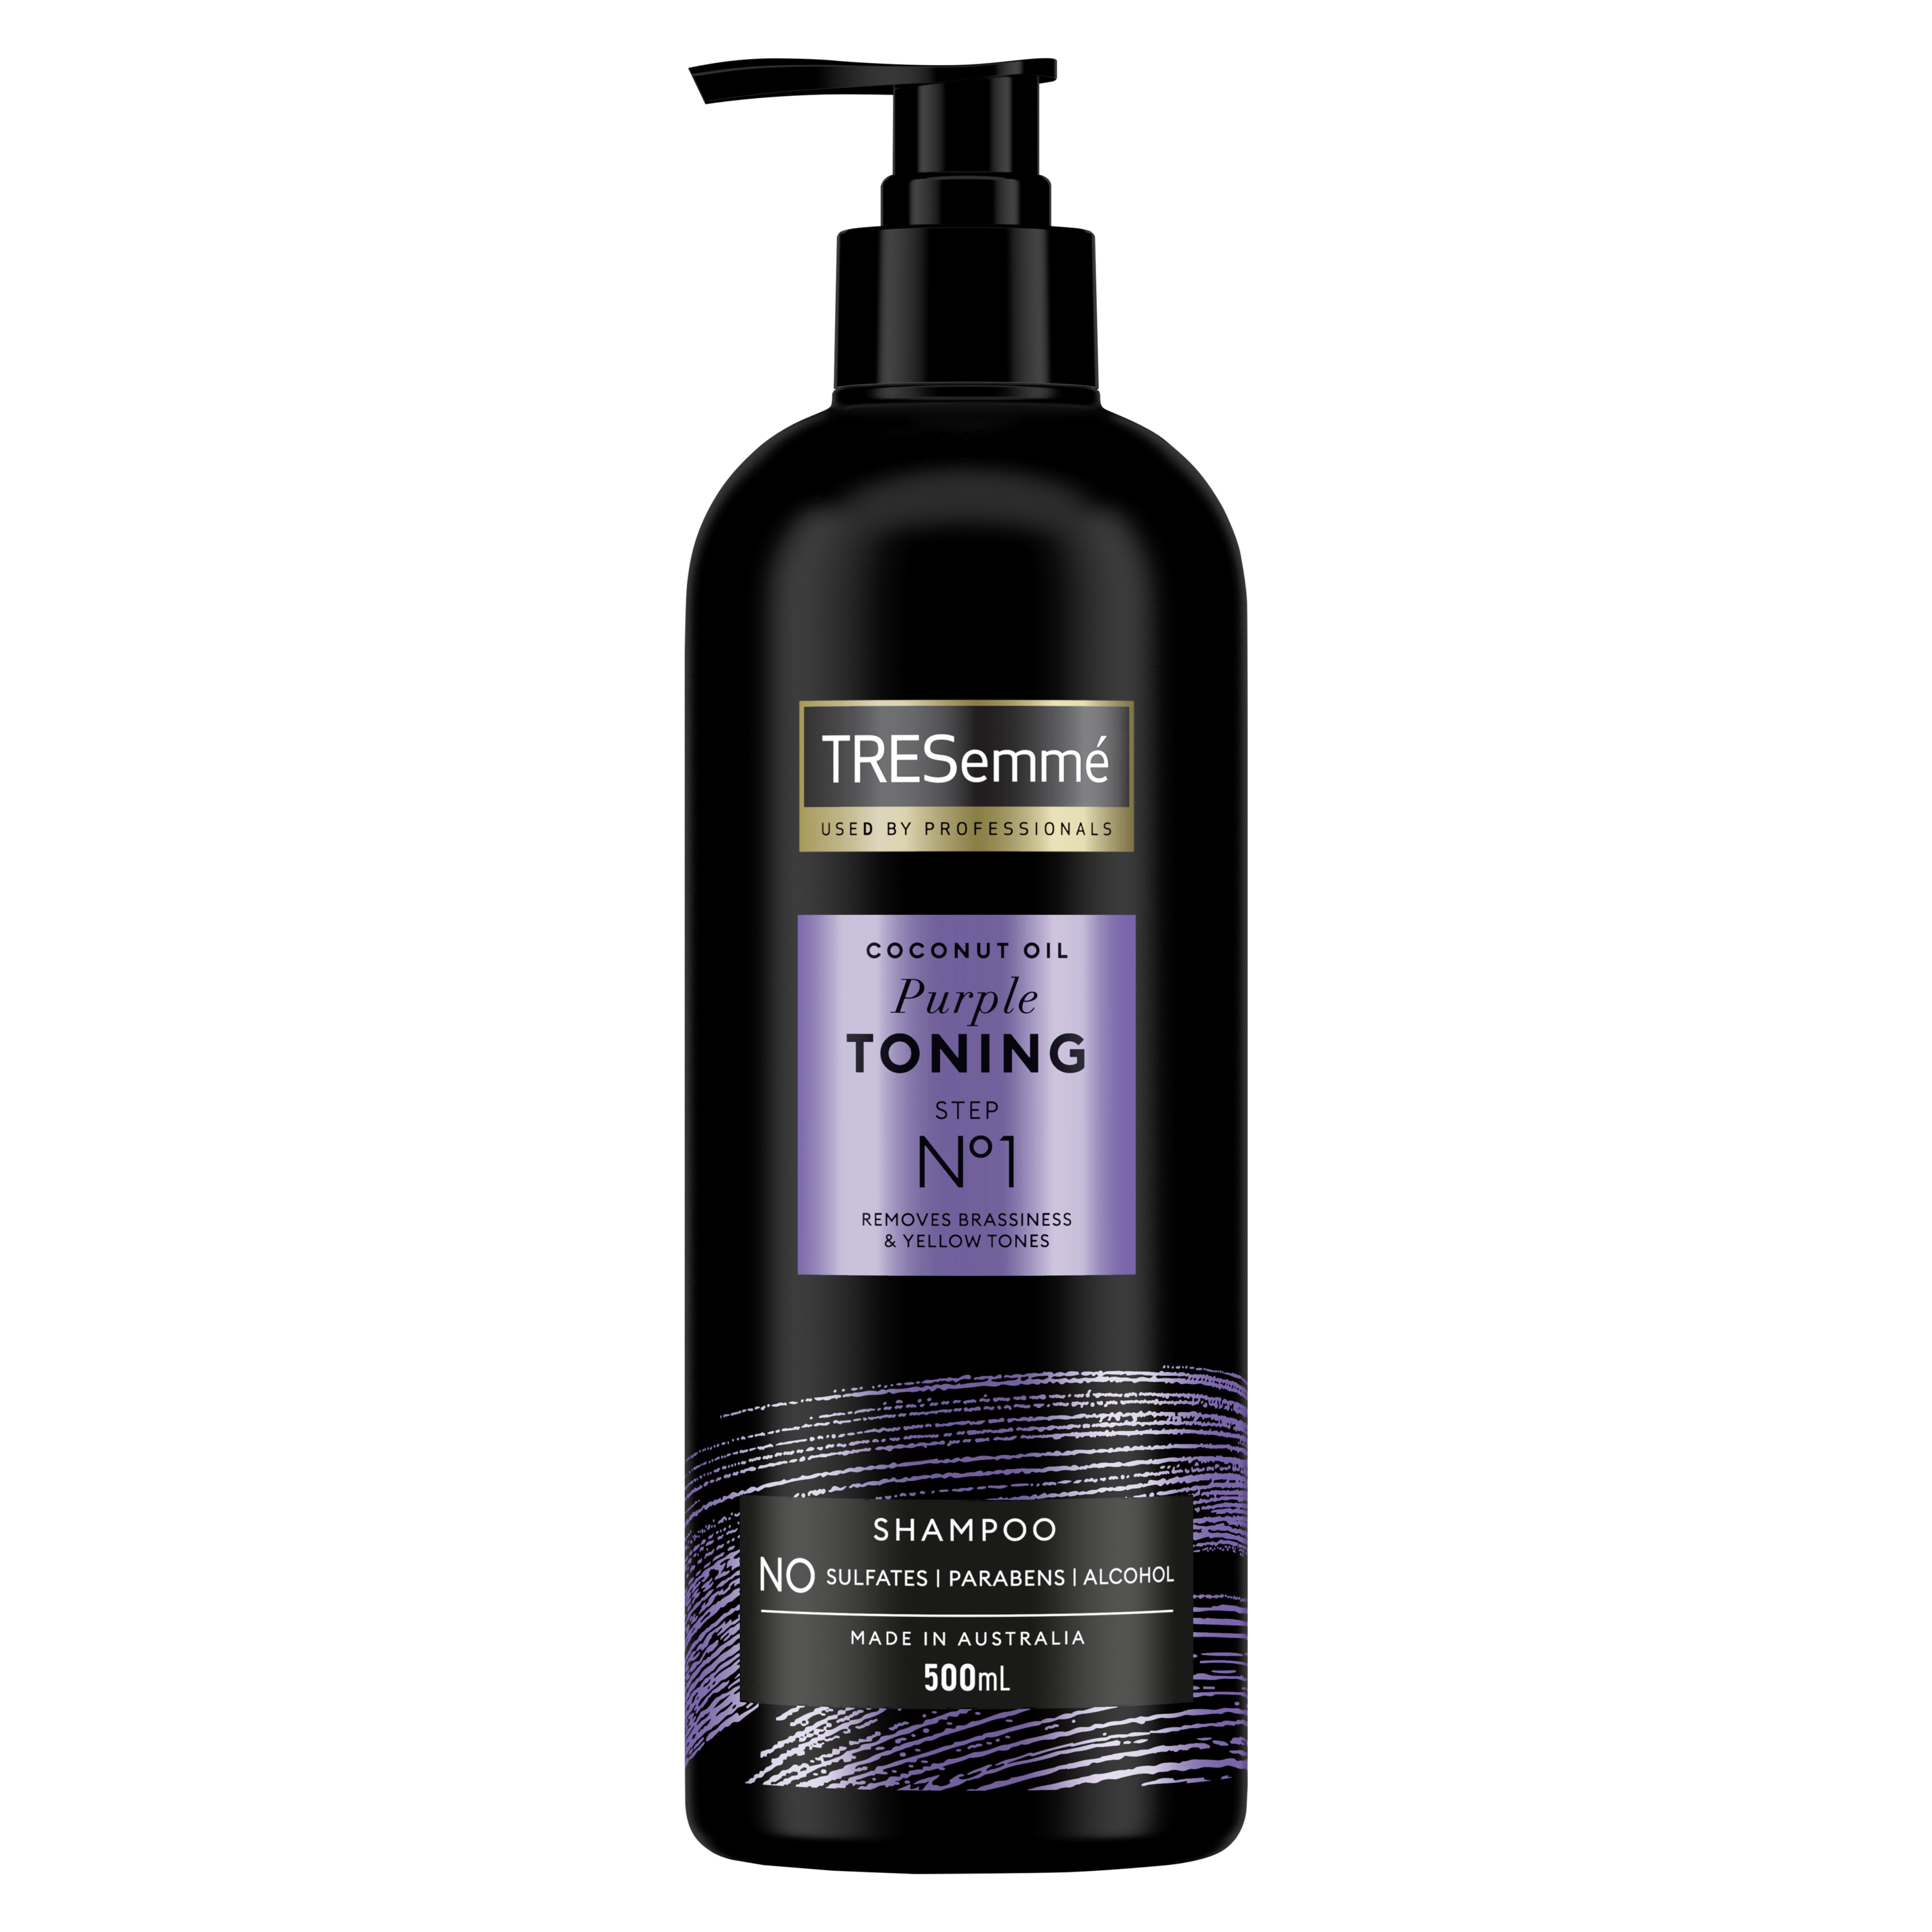 A 500ml bottle of TRESemmé Purple Toning Shampoo